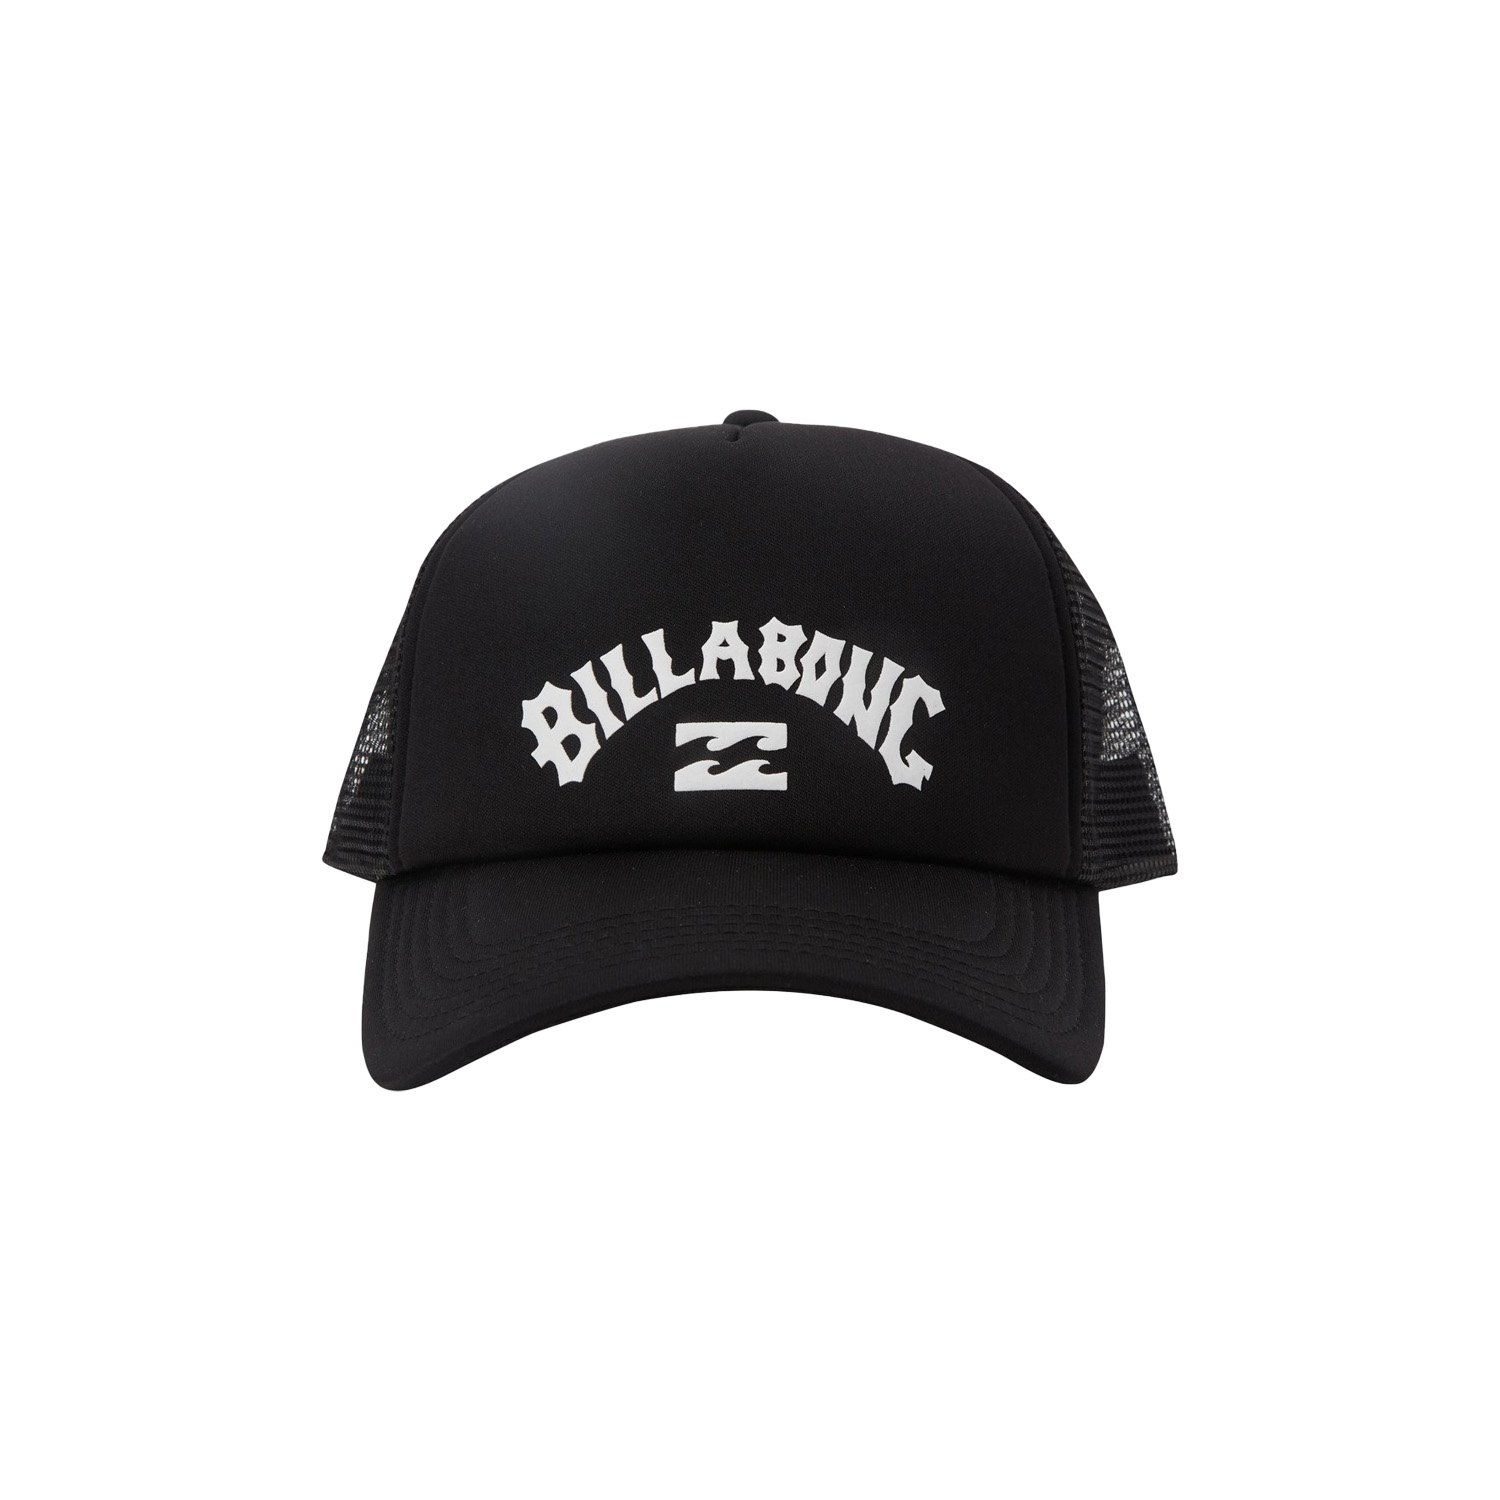 Billabong Podium Trucker Erkek Şapka - Siyah - 1